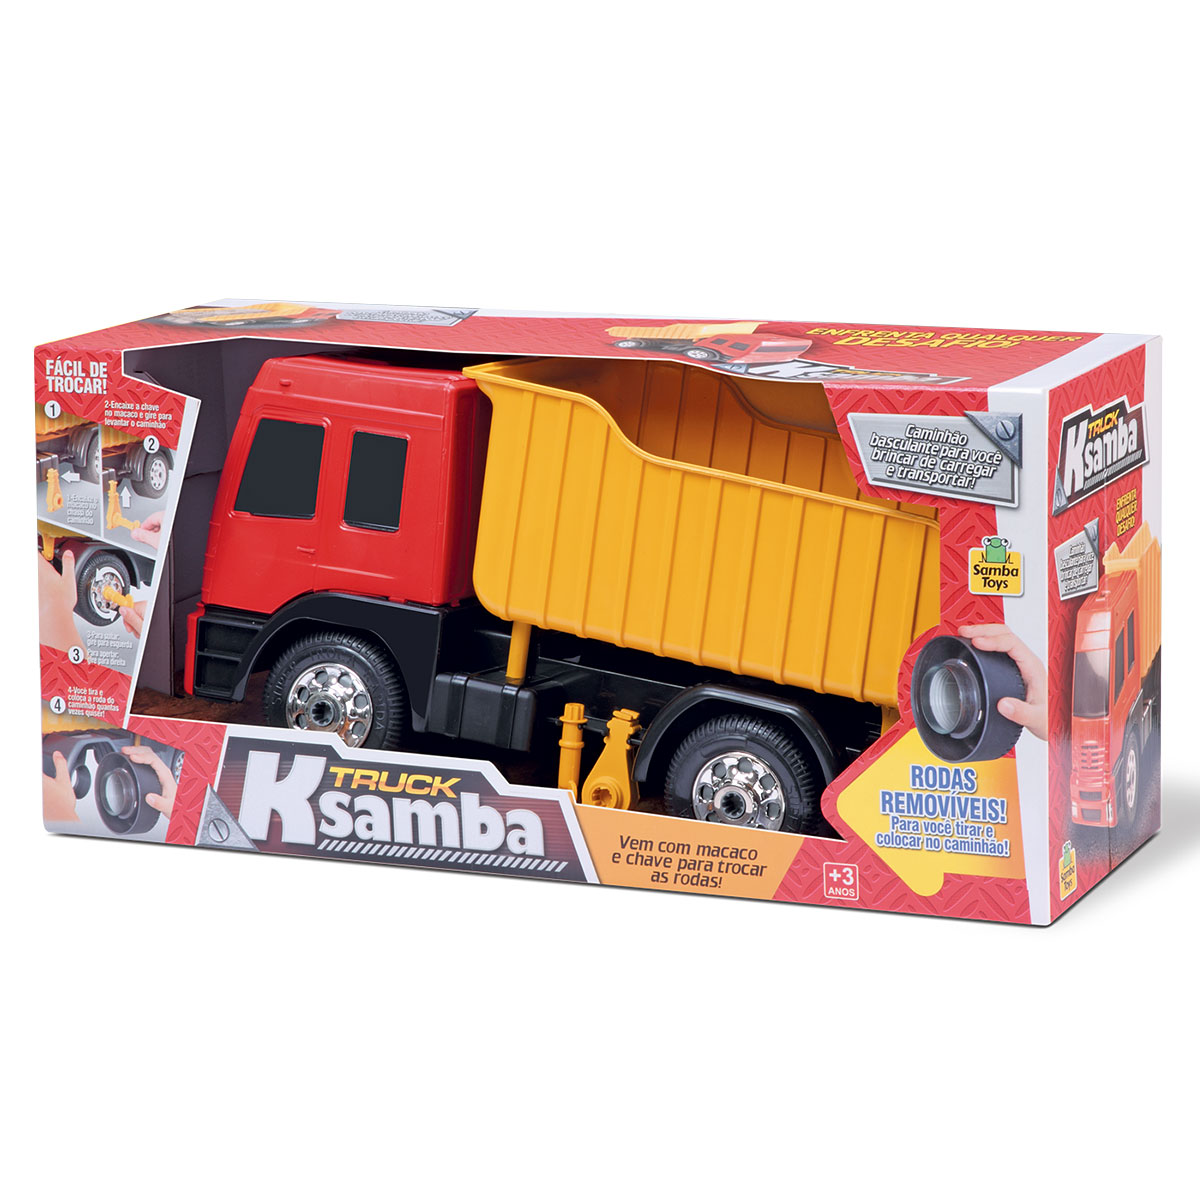 Truck K Samba